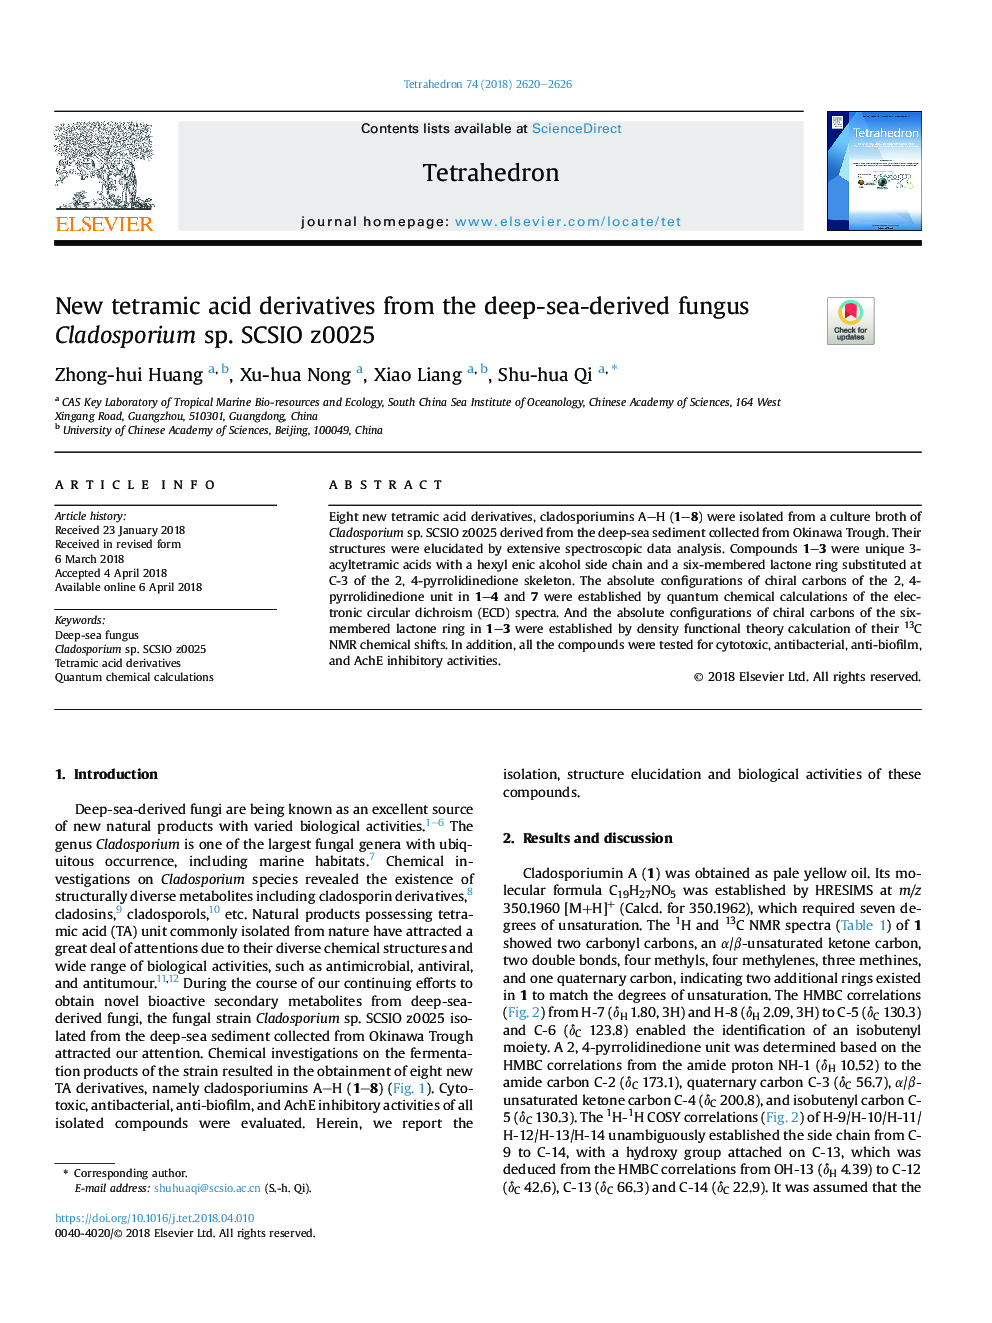 New tetramic acid derivatives from the deep-sea-derived fungus Cladosporium sp. SCSIO z0025